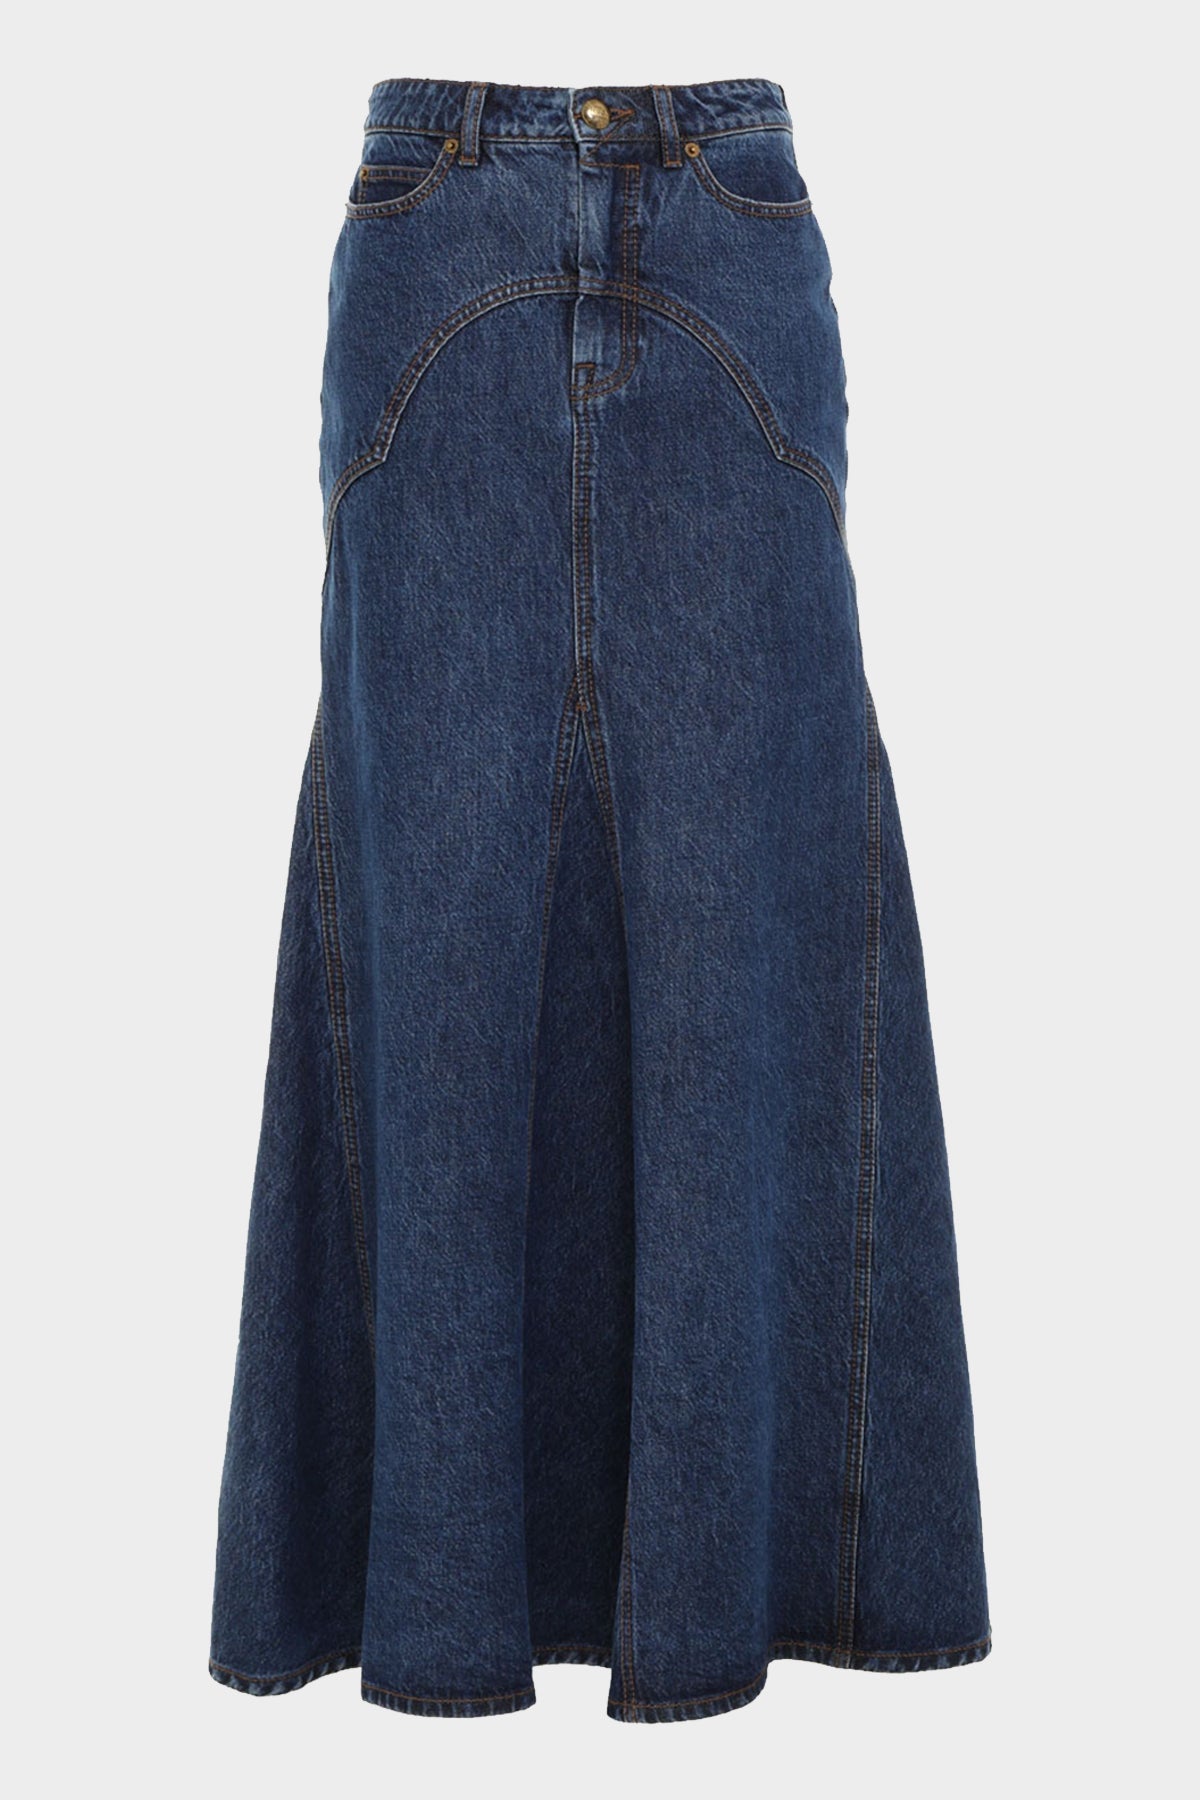 Luminosity Denim Maxi Skirt in Sapphire - shop-olivia.com